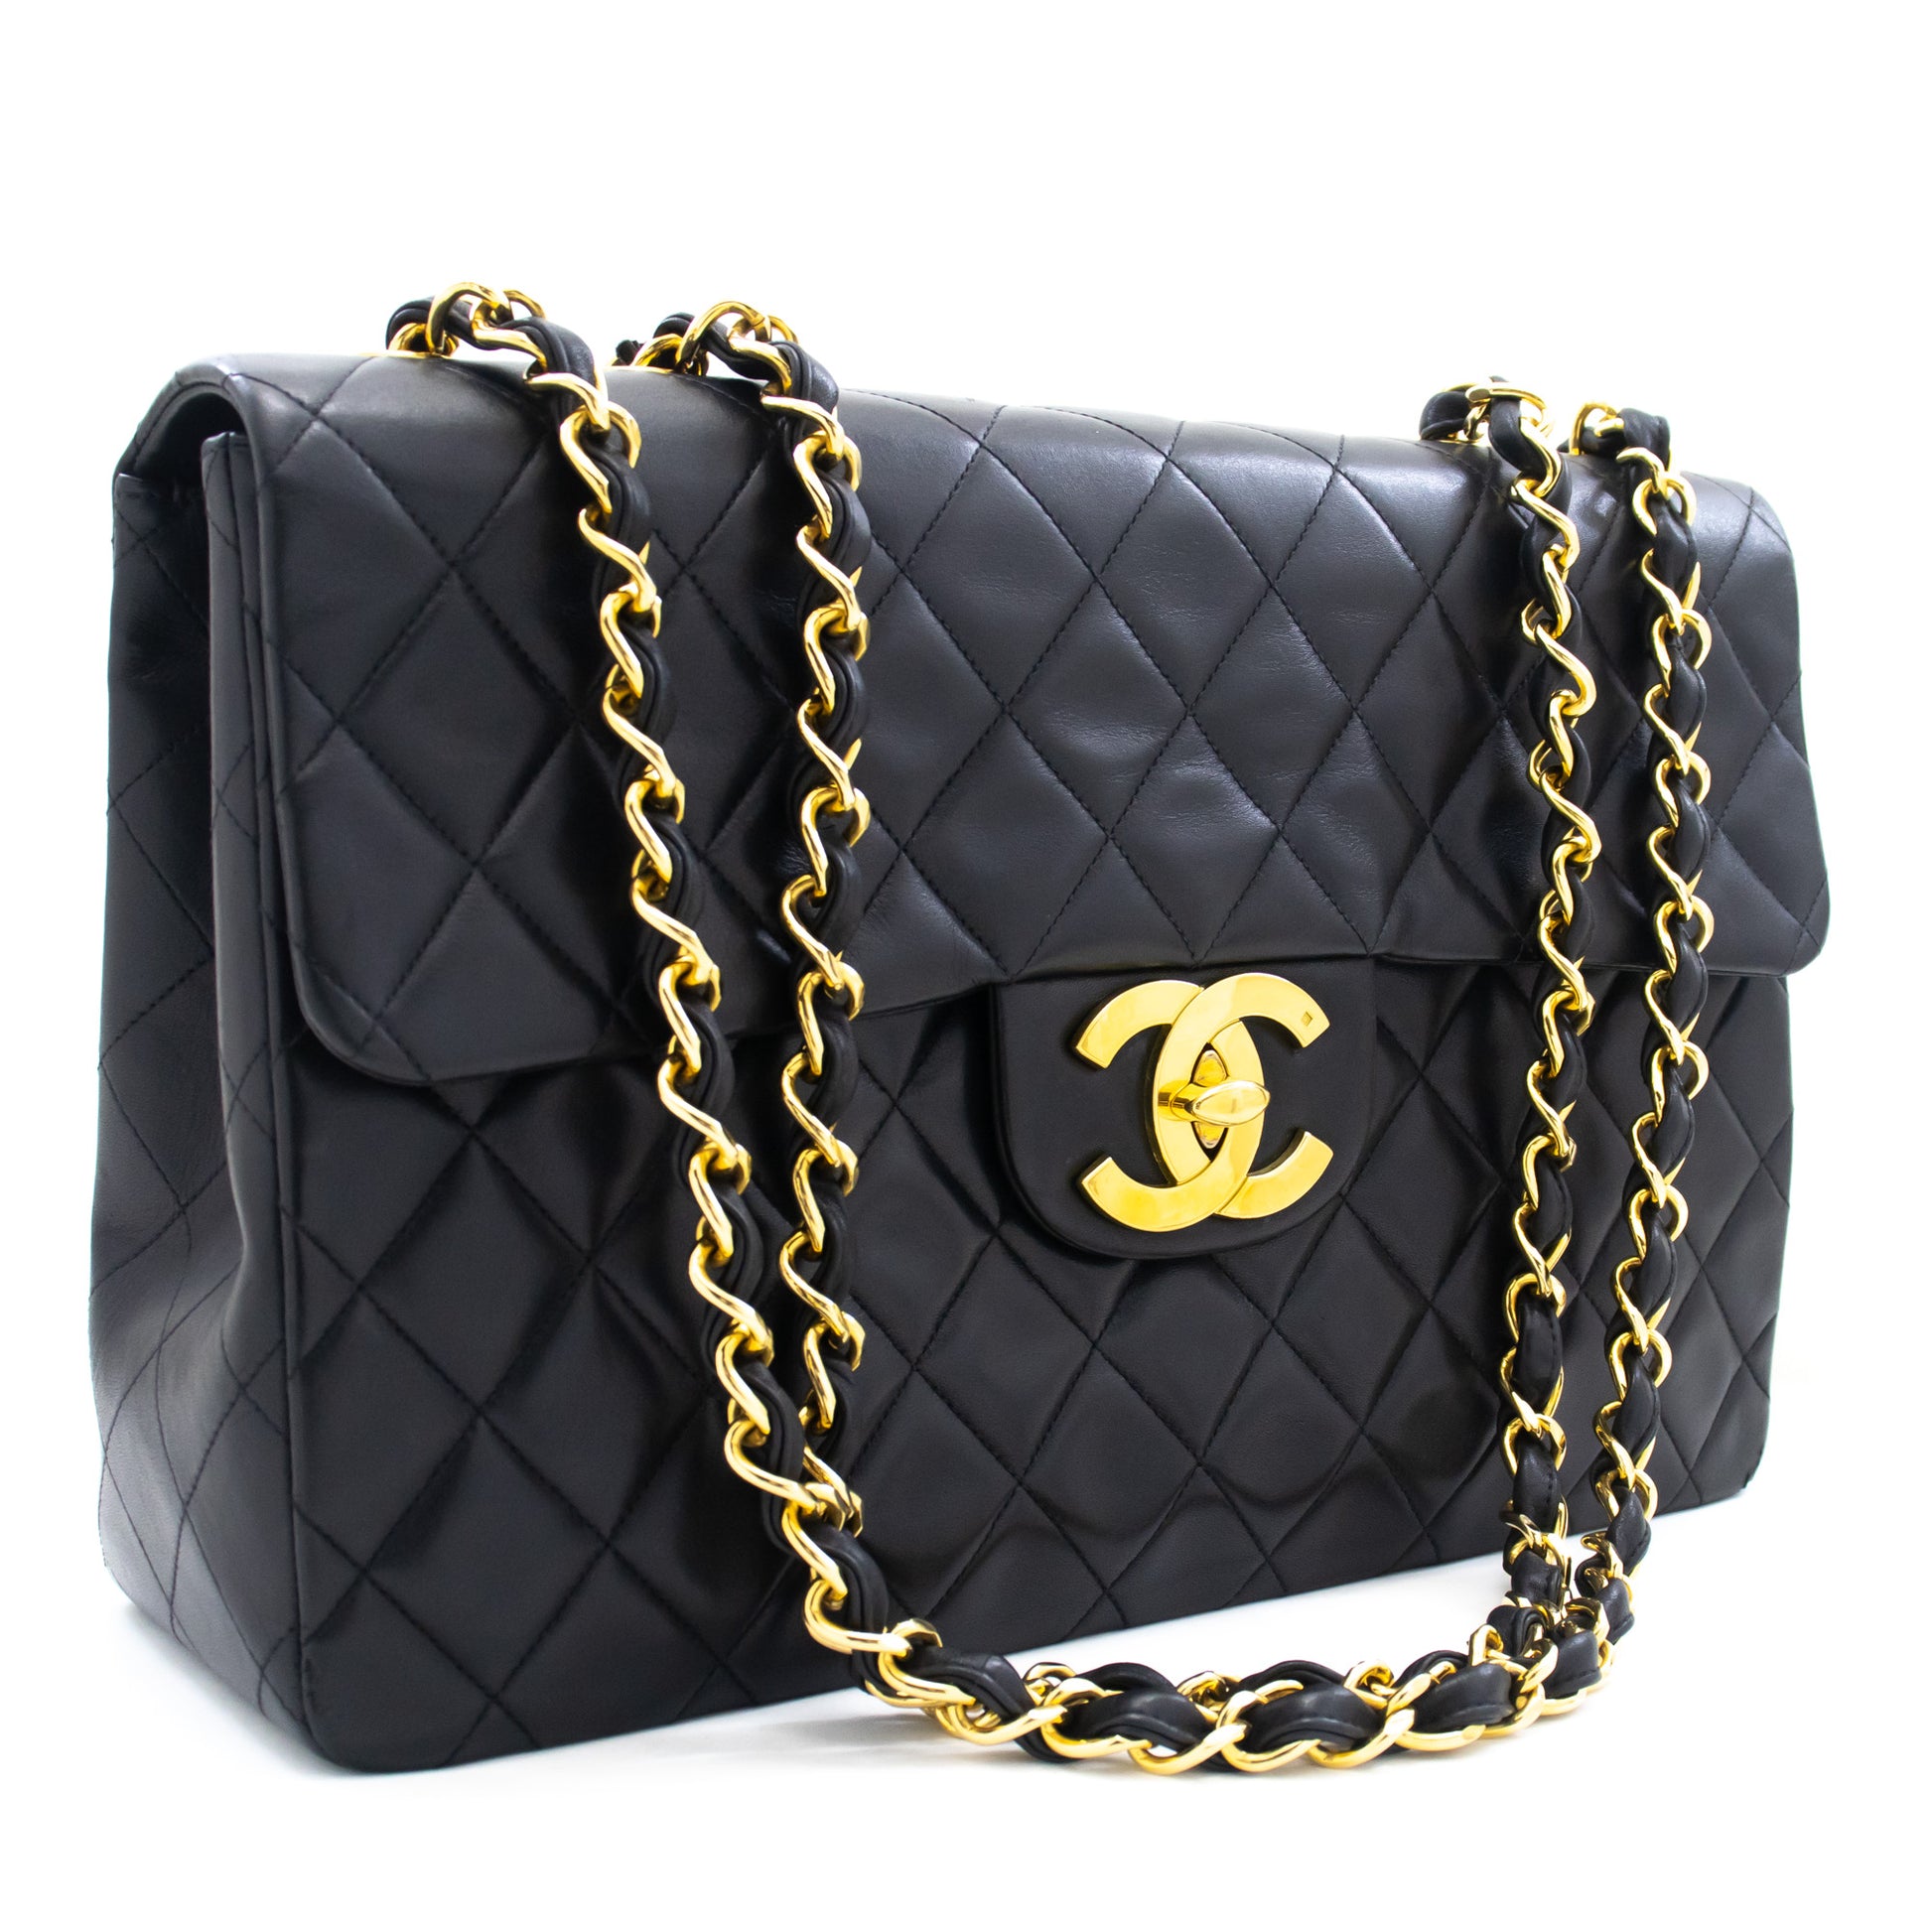 Buy Chanel Lambskin Bag Online In India -  India